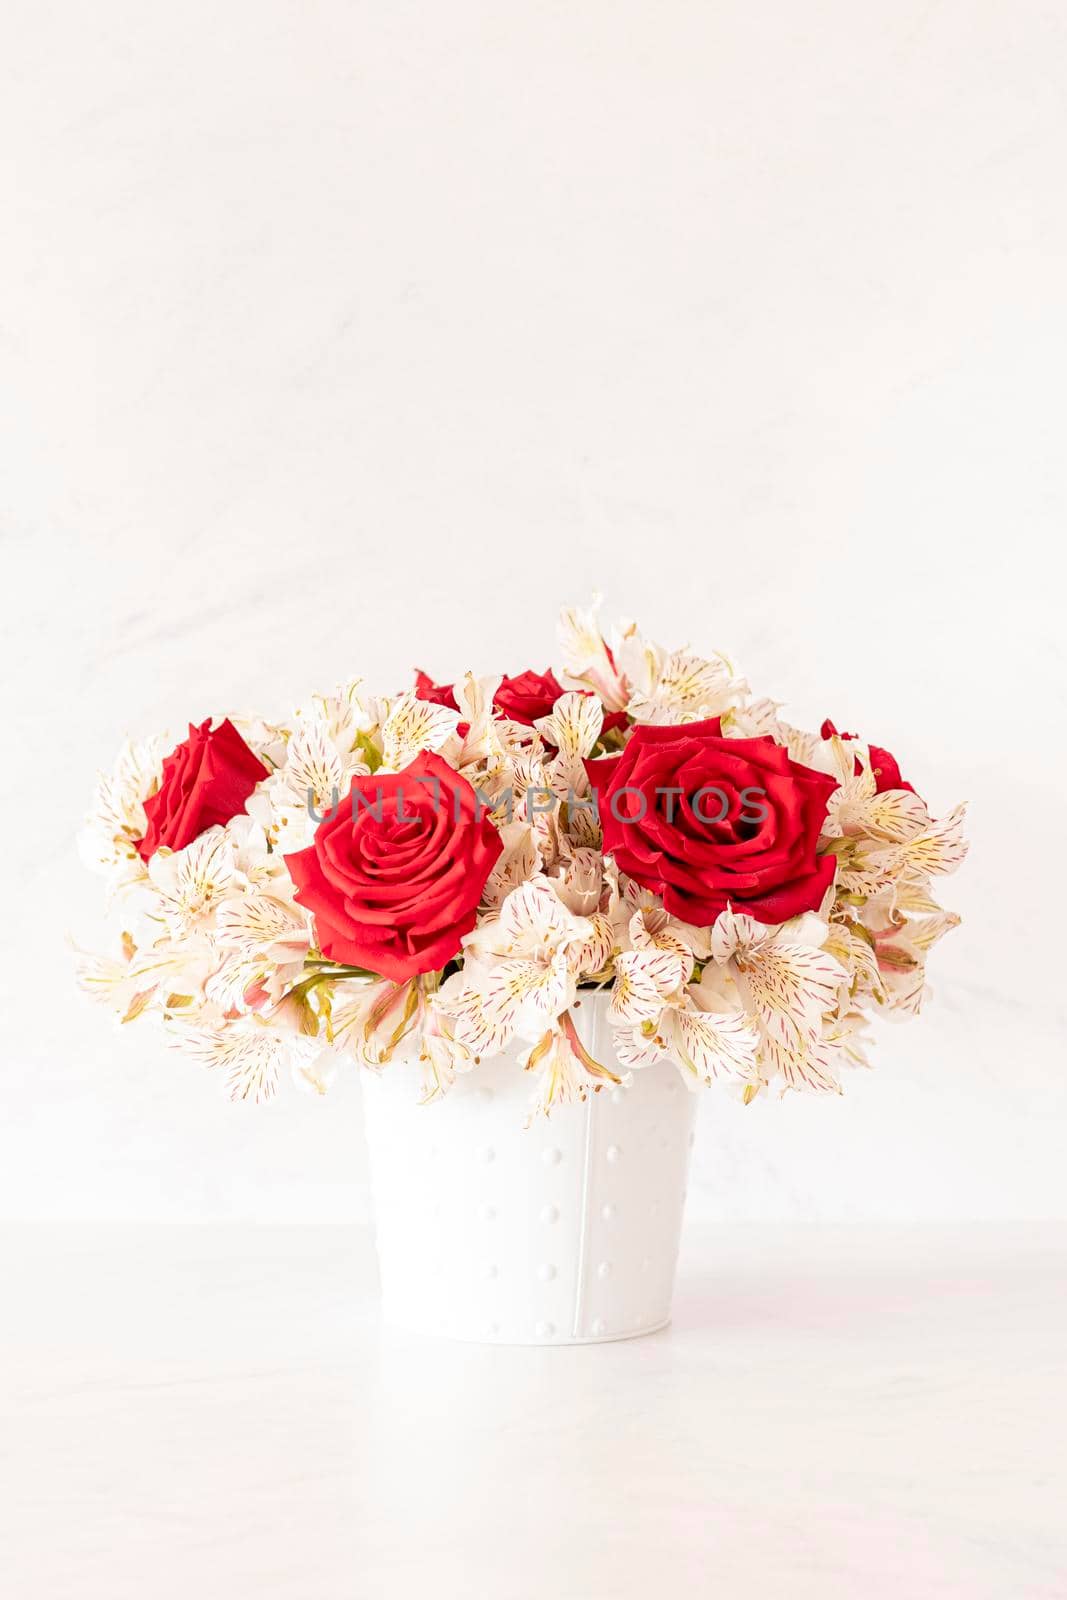 Floral arrangement composed of red roses for spring